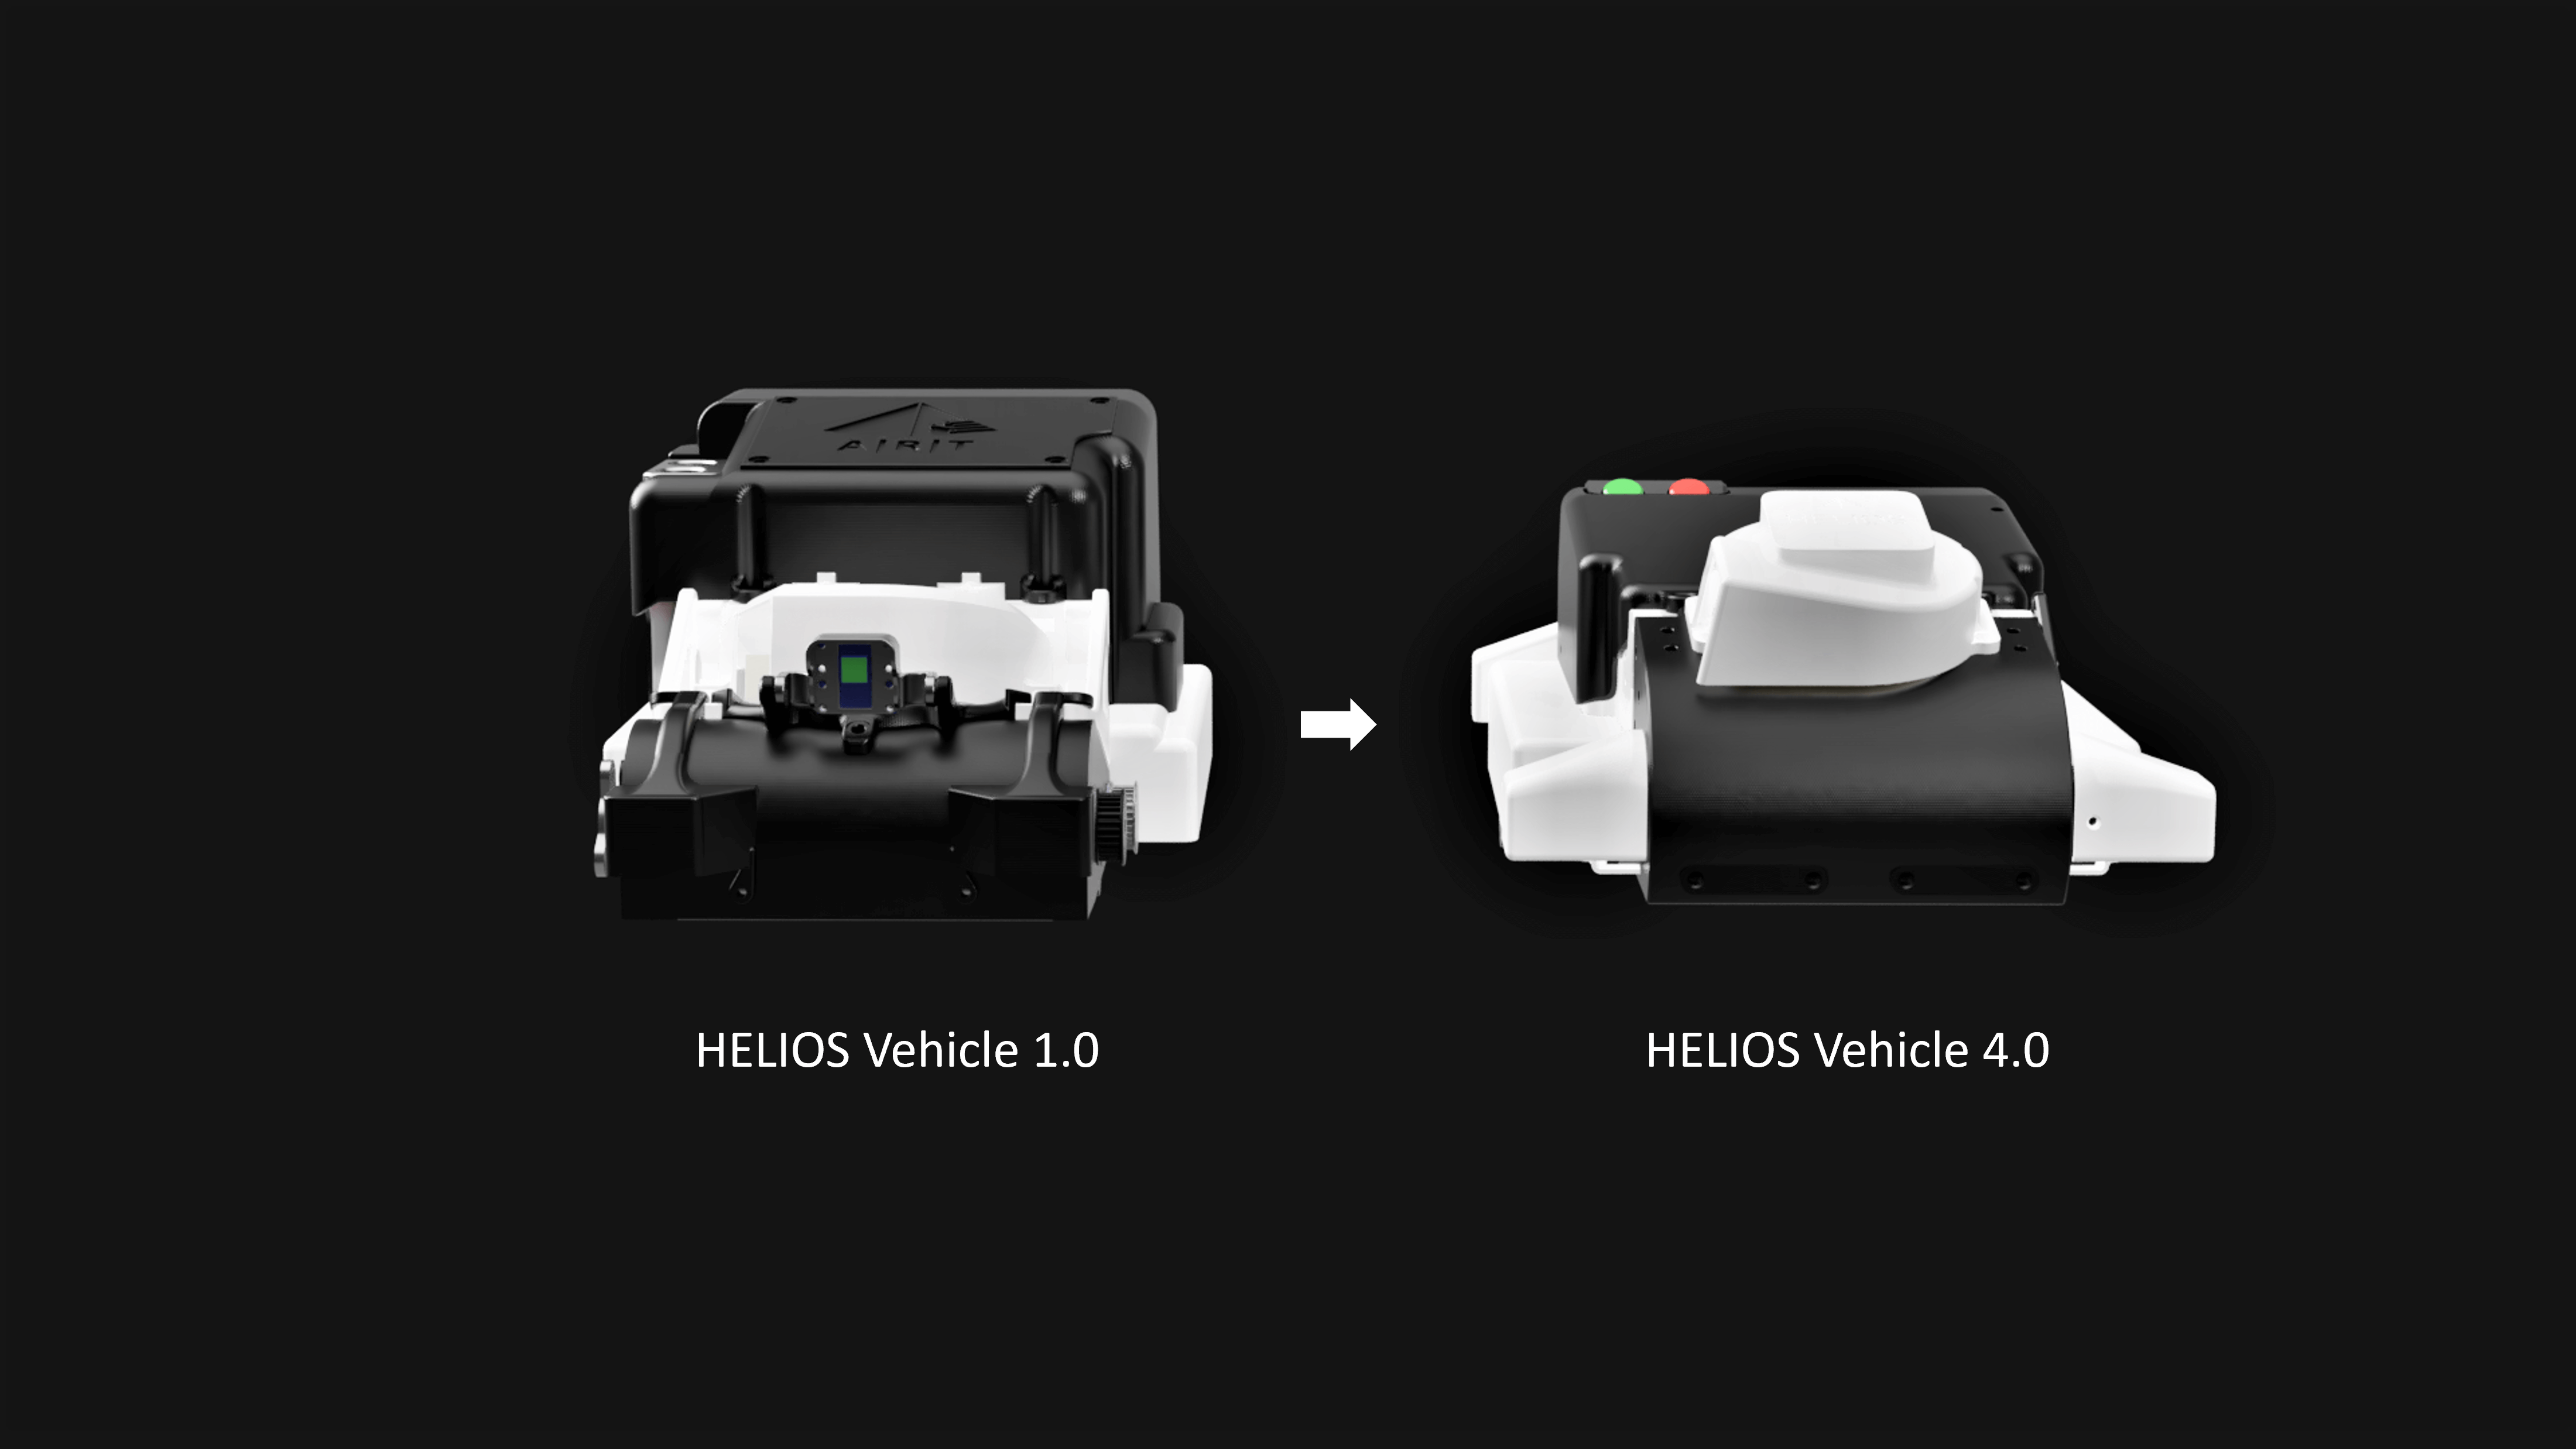 HELIOS Vehicle 4.0 with custom PCB